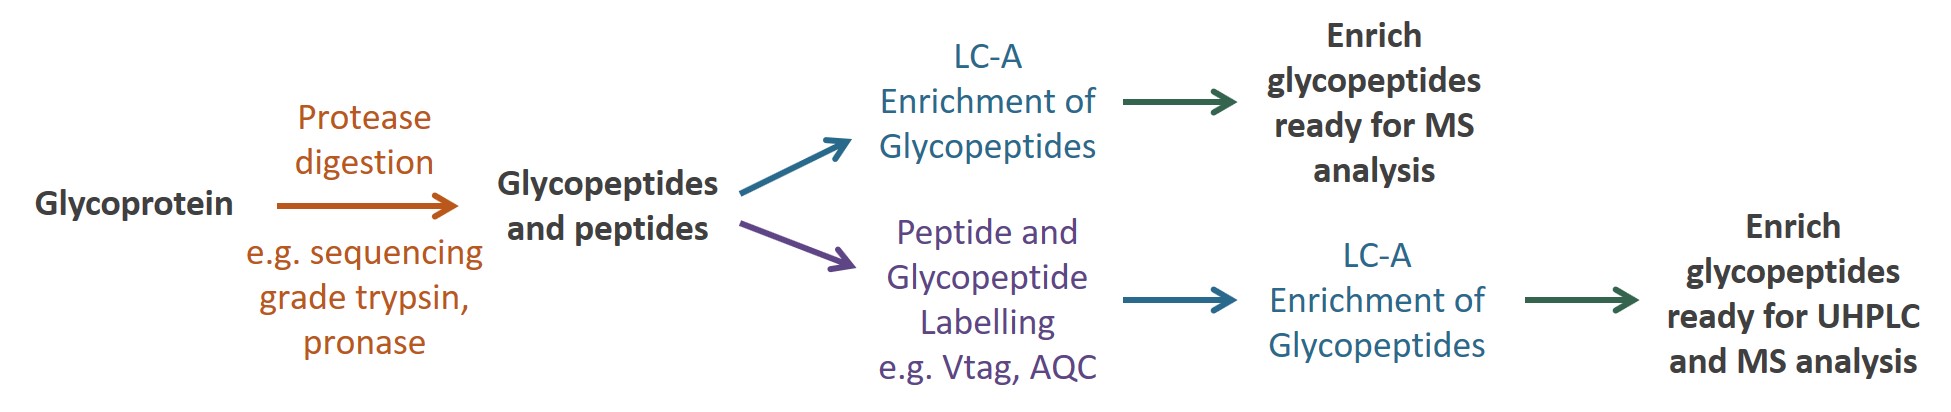 Ludger Glycopeptide Enrichment - LC-A-24 cartridges Workflow